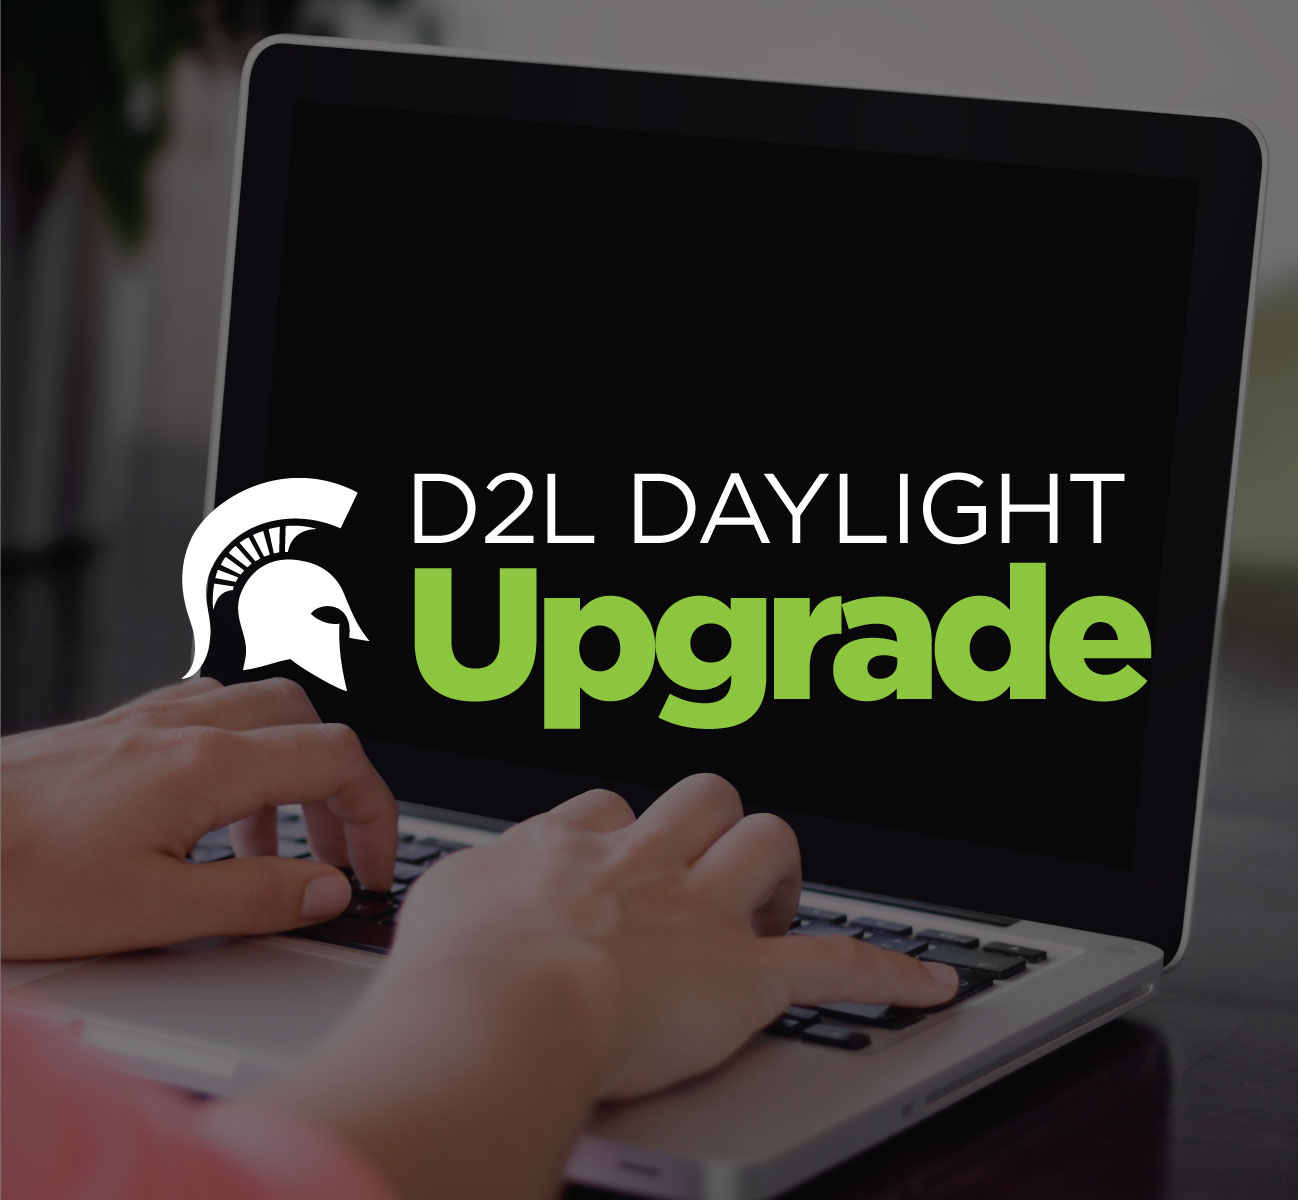 D2L Daylight Upgrade graphic